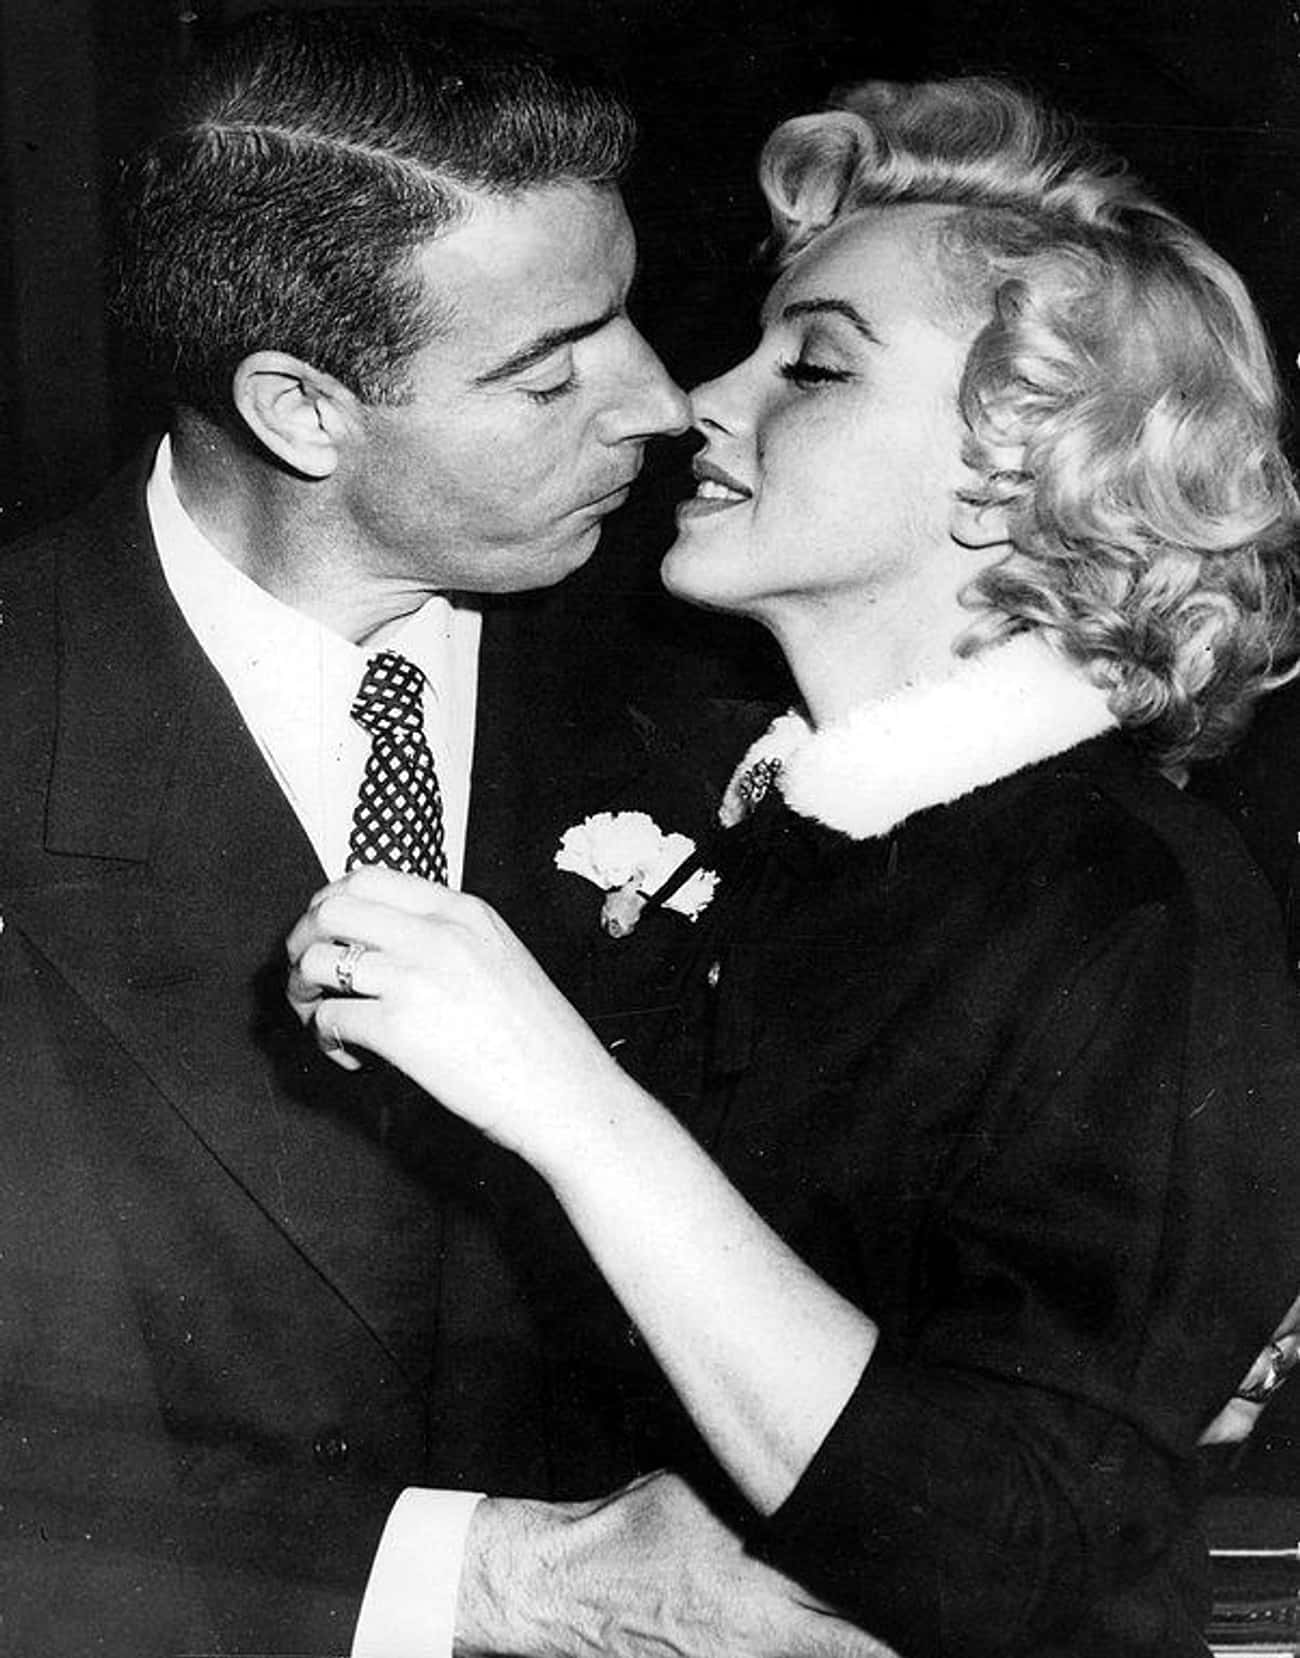 Joe DiMaggio Sent Flowers To Marilyn Monroe's Grave Twice A Week For 20 Years